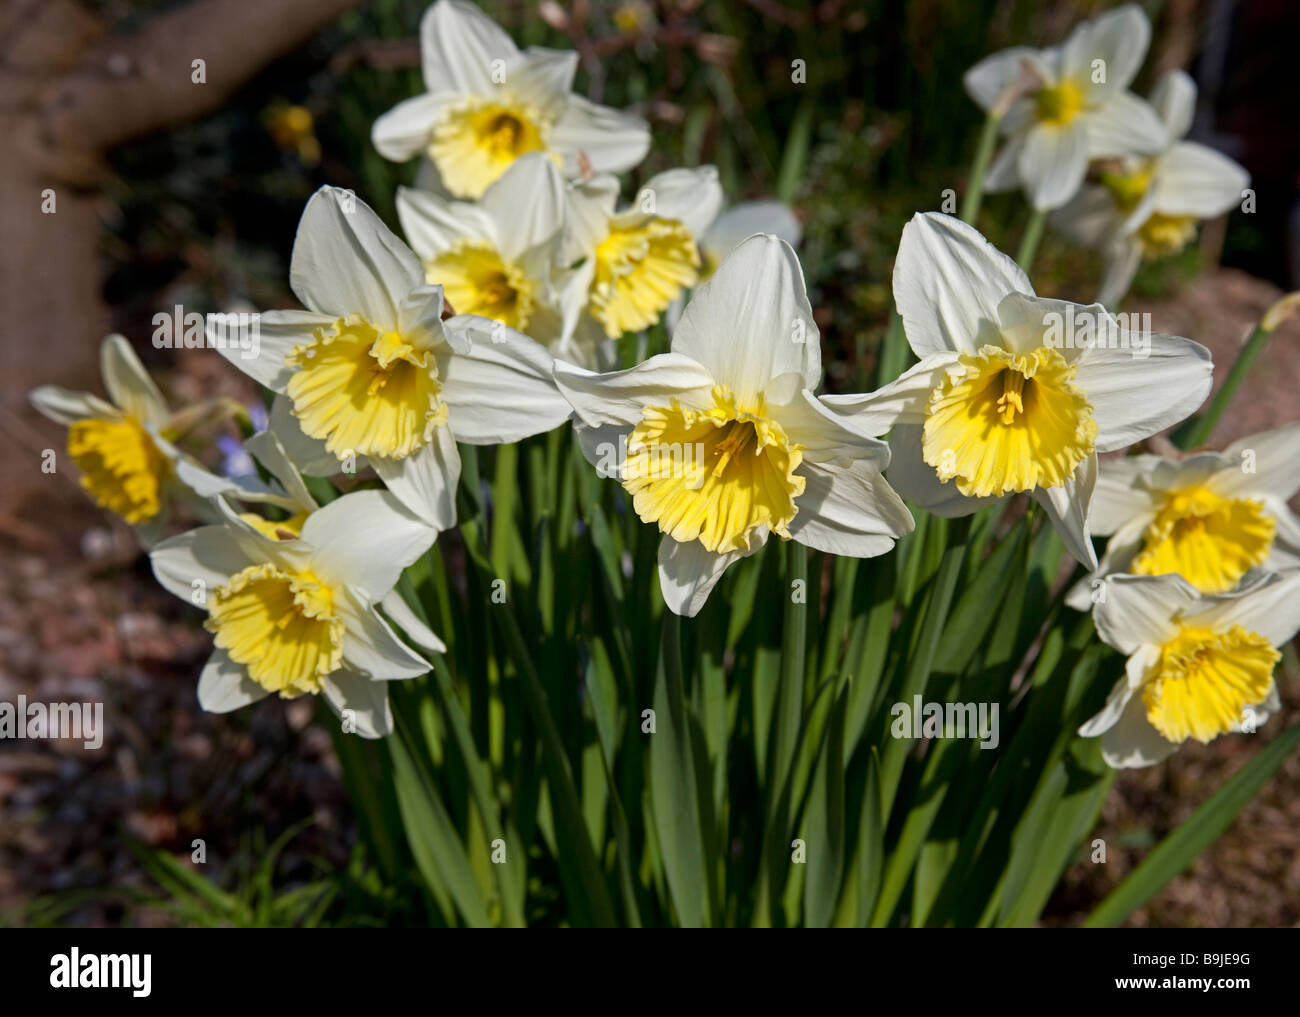 Clump of yellow and white Daffodils, UK, Europe Stock Photo